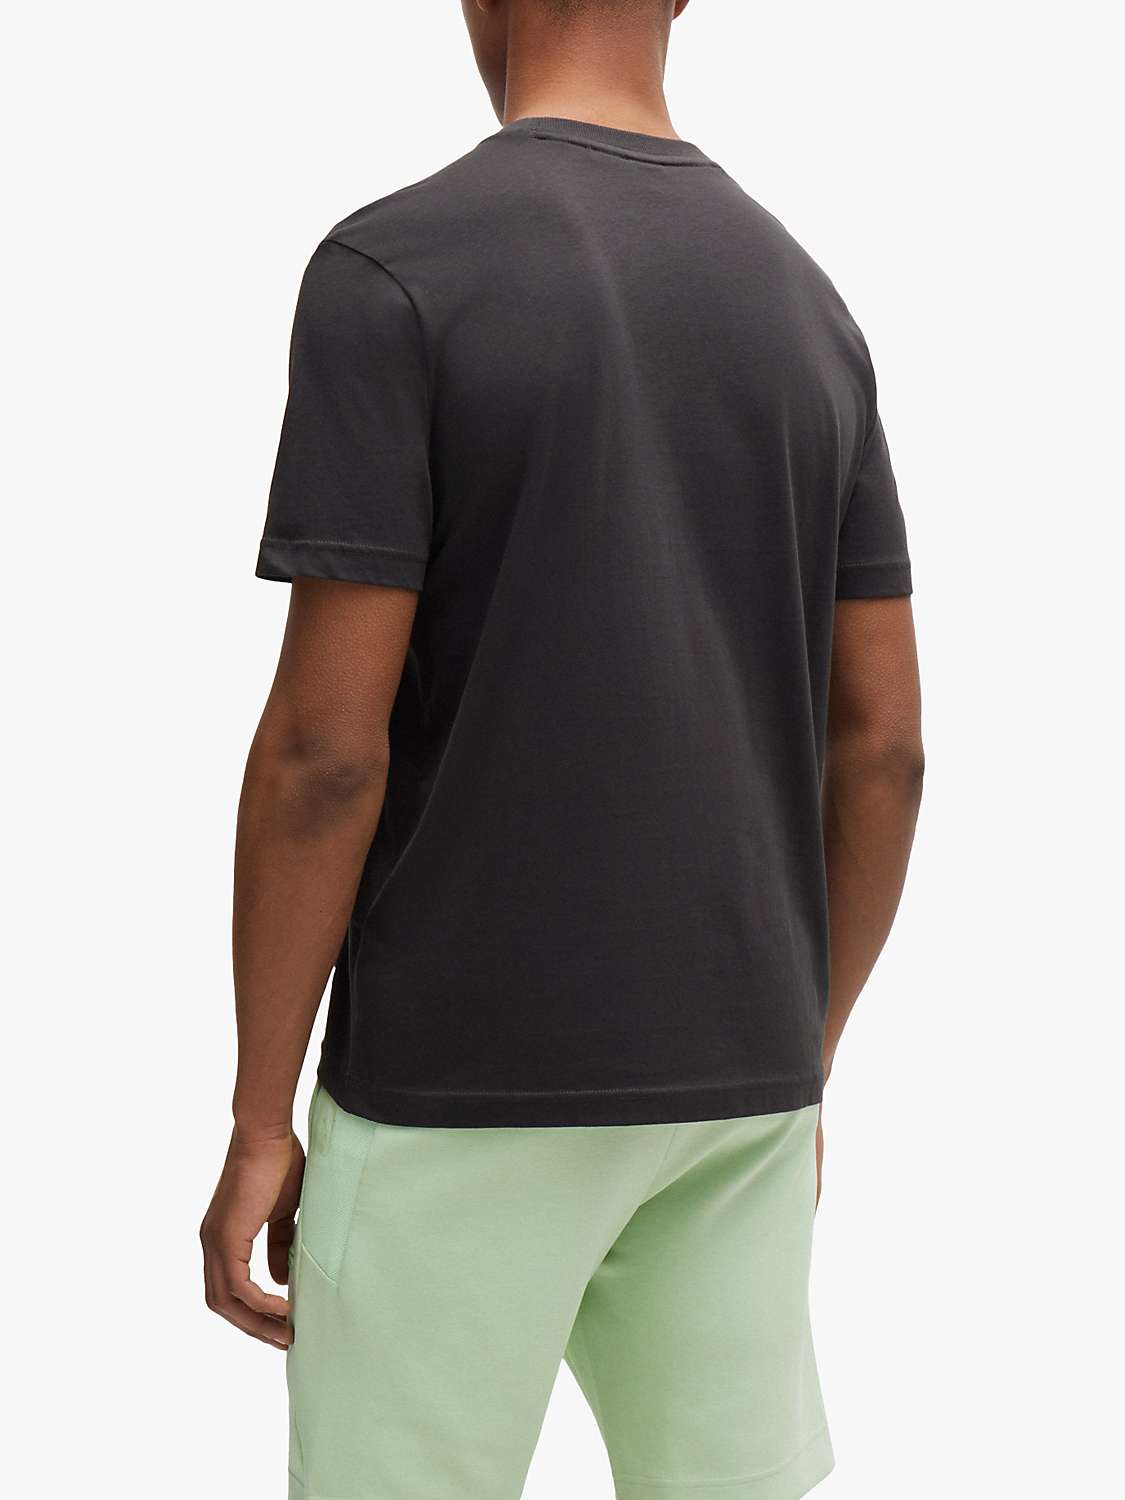 Buy BOSS Flag Short Sleeve T-Shirt, Charcoal Online at johnlewis.com